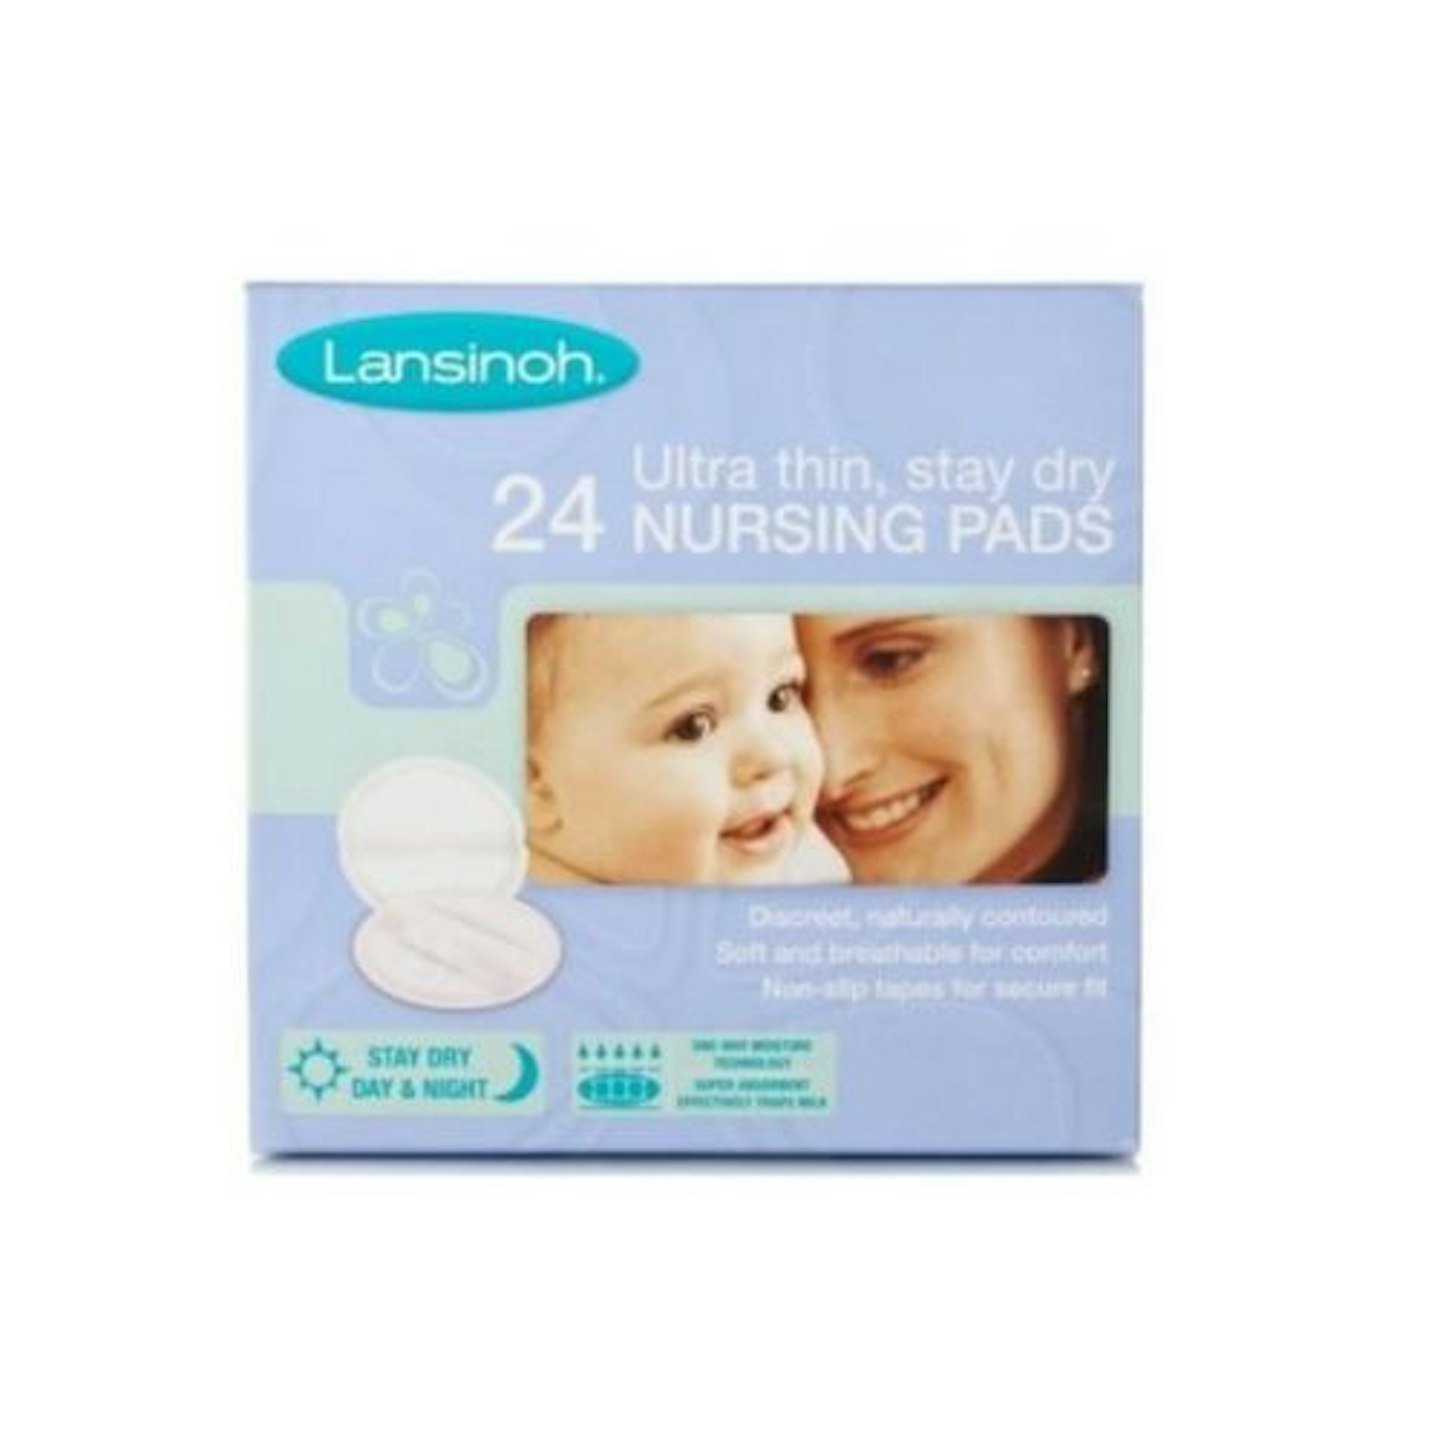 https://images.bauerhosting.com/affiliates/sites/12/2023/06/Lansinoh-Stay-Dry-Nursing-Pads.jpg?auto=format&w=1440&q=80